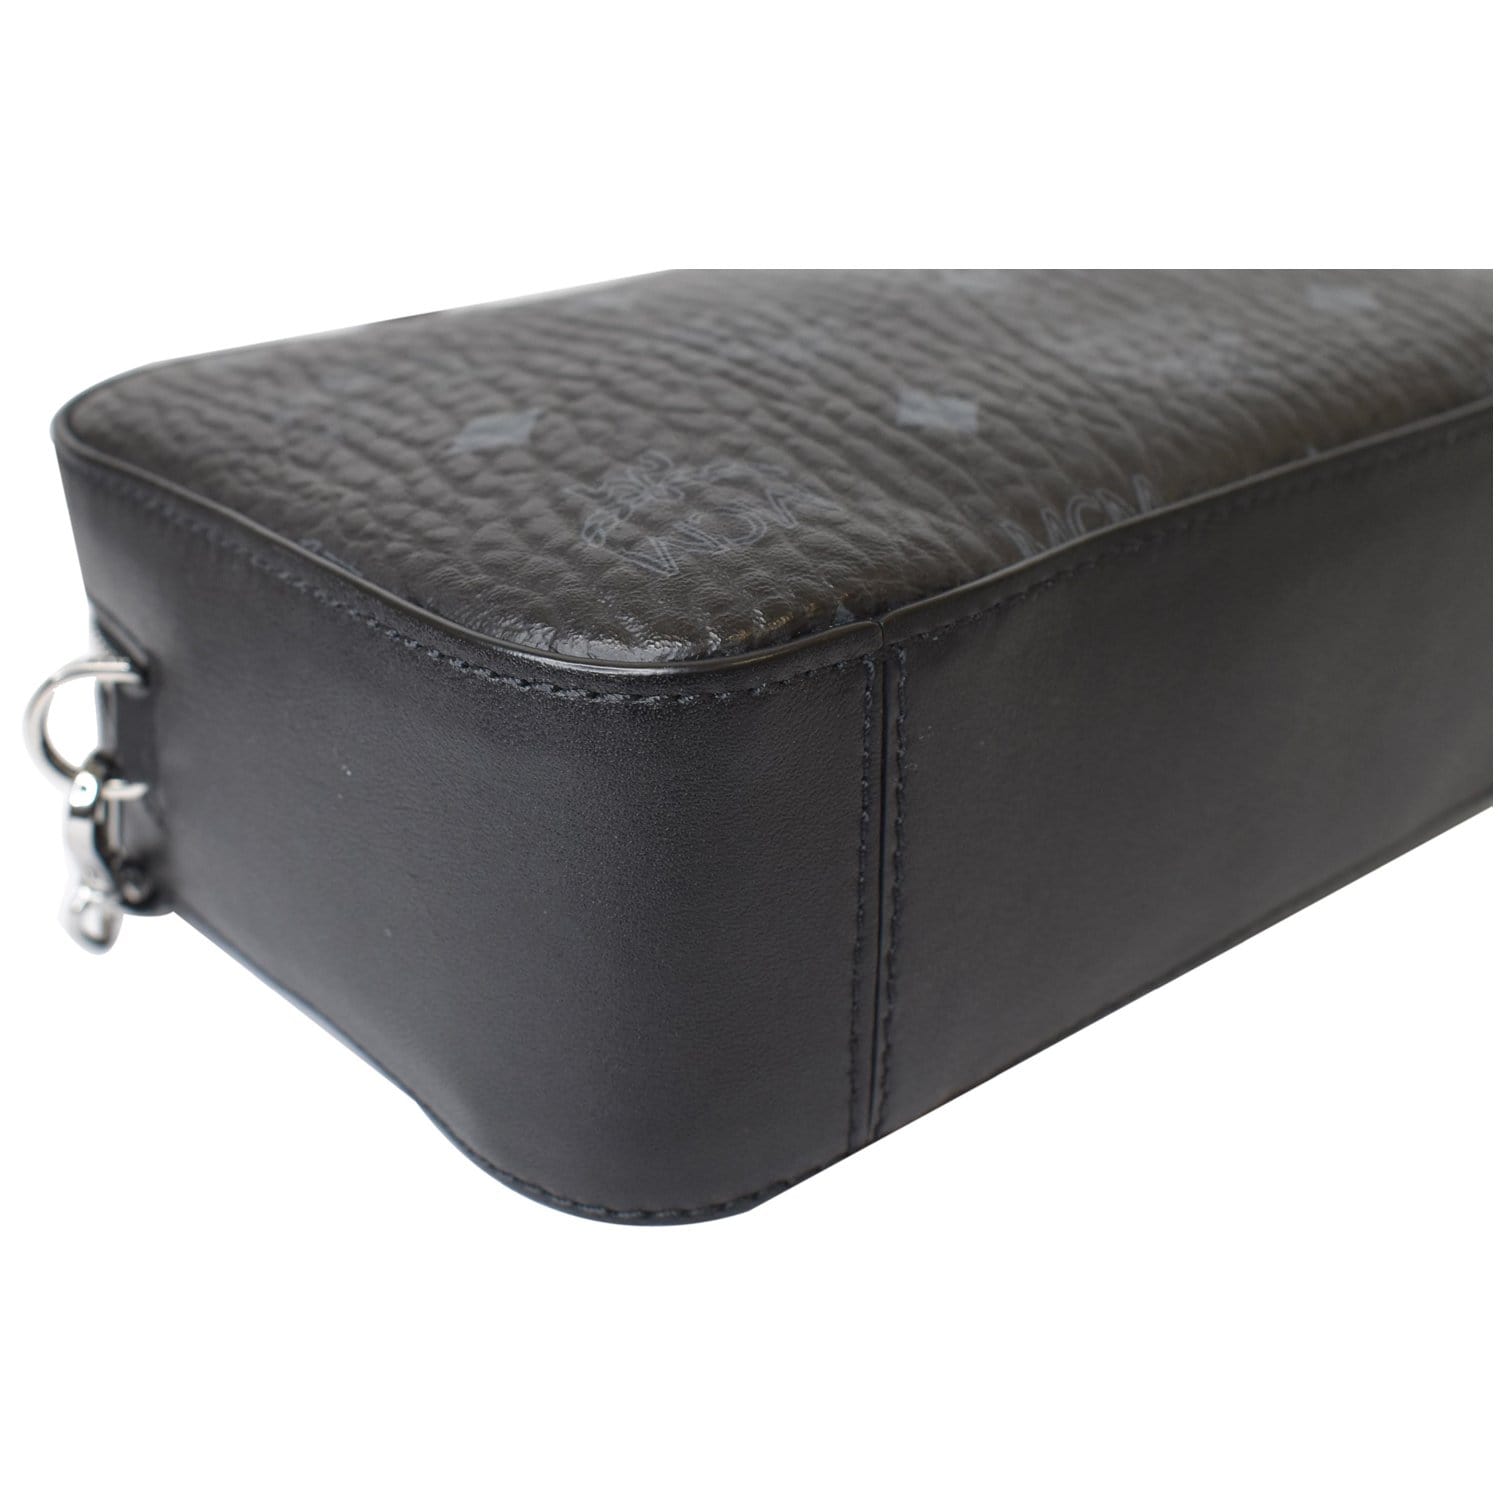 New MCM $675 Silver Black Double Zip Leather Crossbody Camera Bag Purse